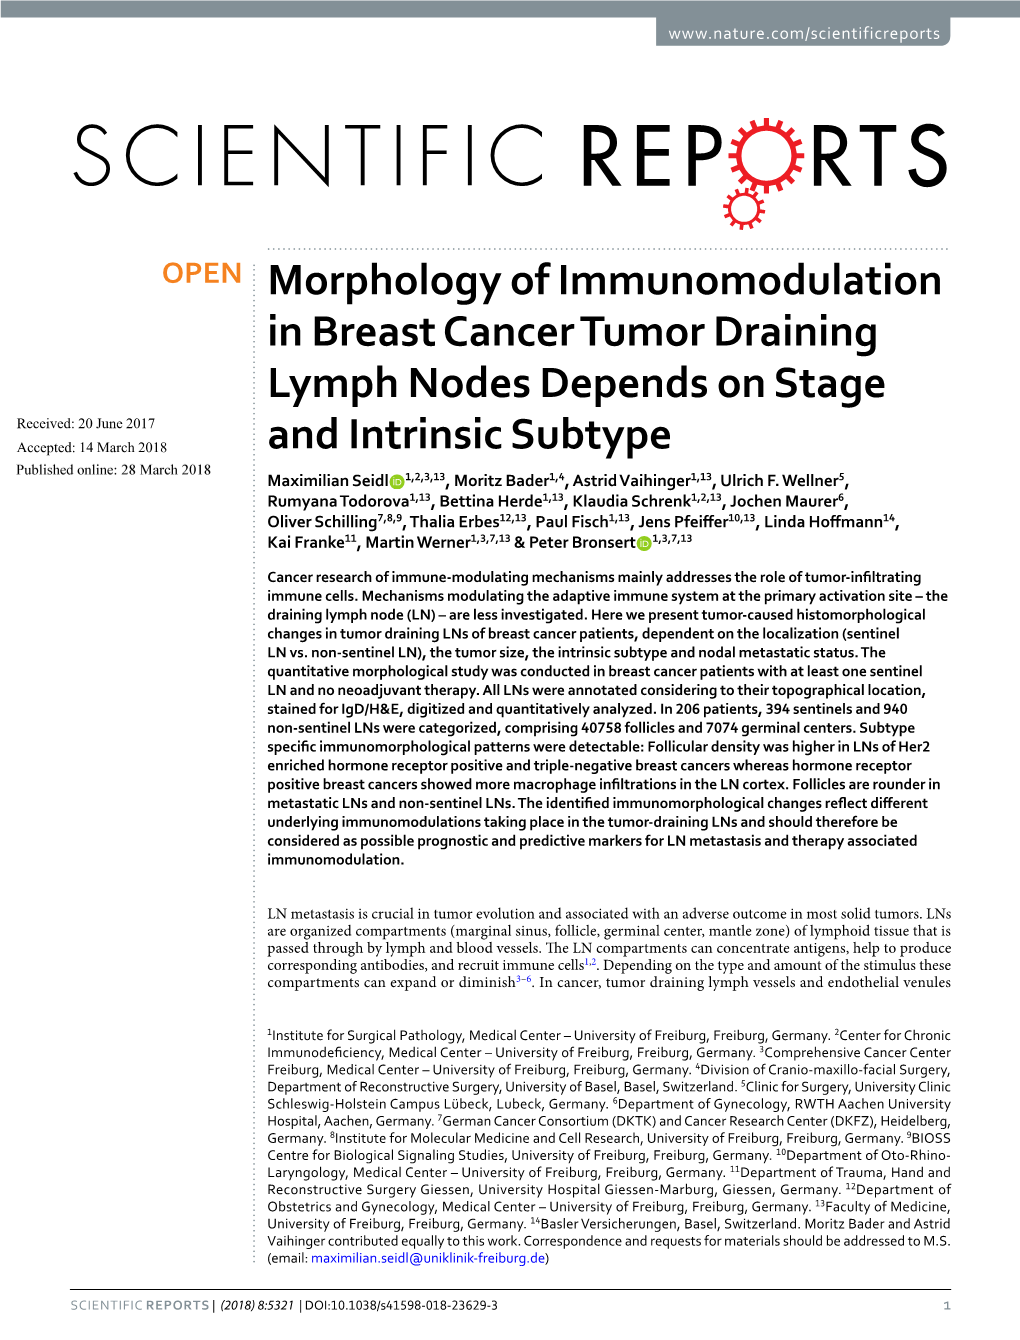 Morphology of Immunomodulation in Breast Cancer Tumor Draining